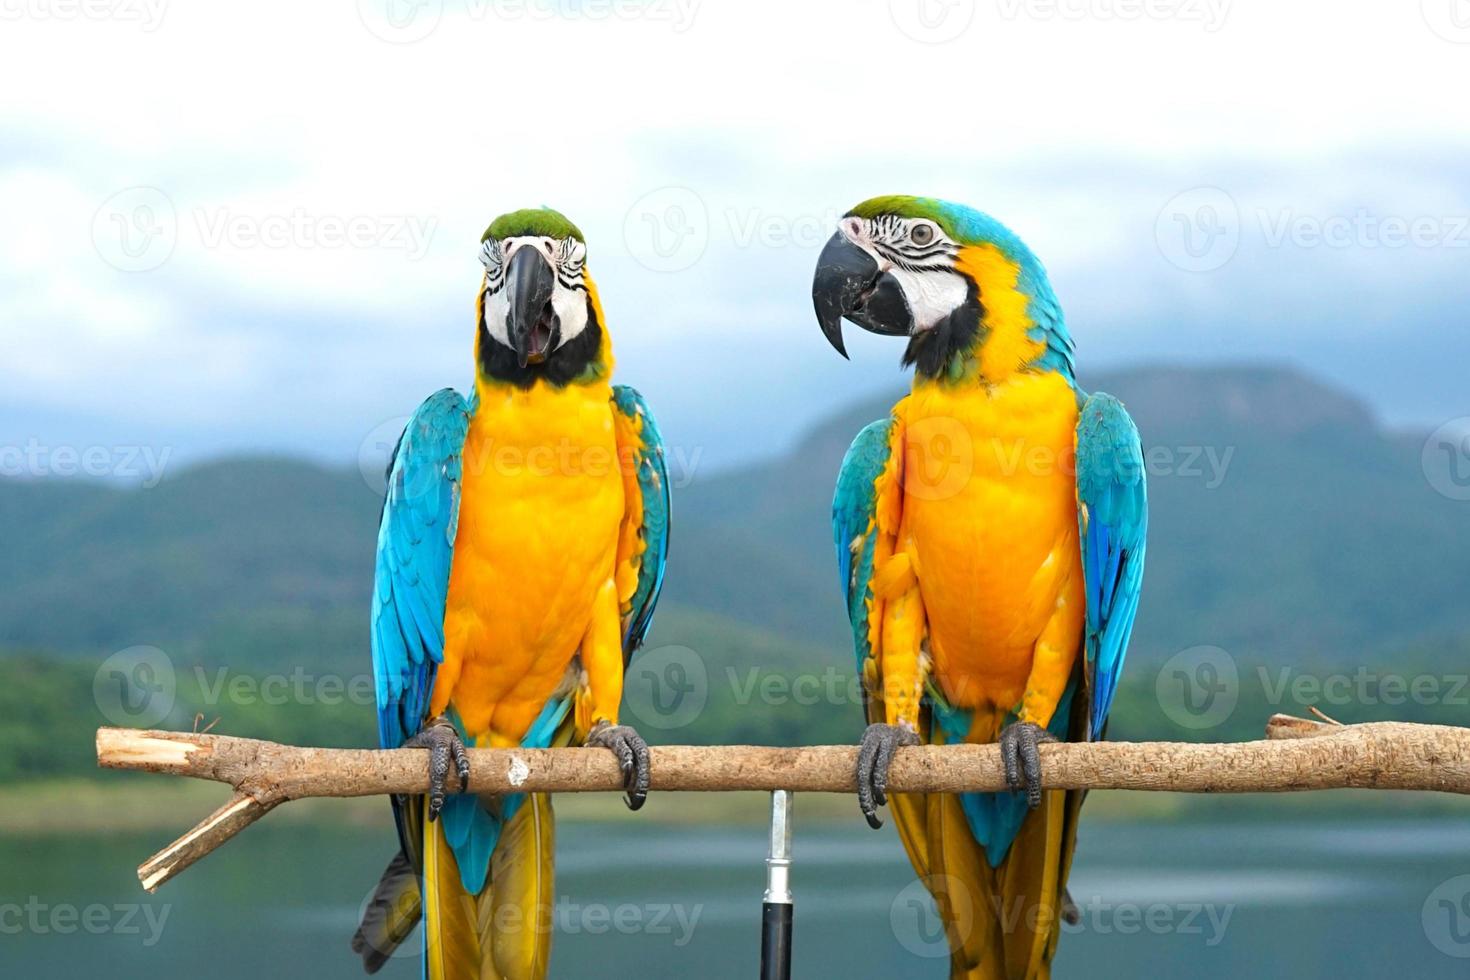 deux ara bleu et or ara ararauna est un grand perroquet sud-américain sur perche en bois, fond naturel, montagnes, ciel, flou photo